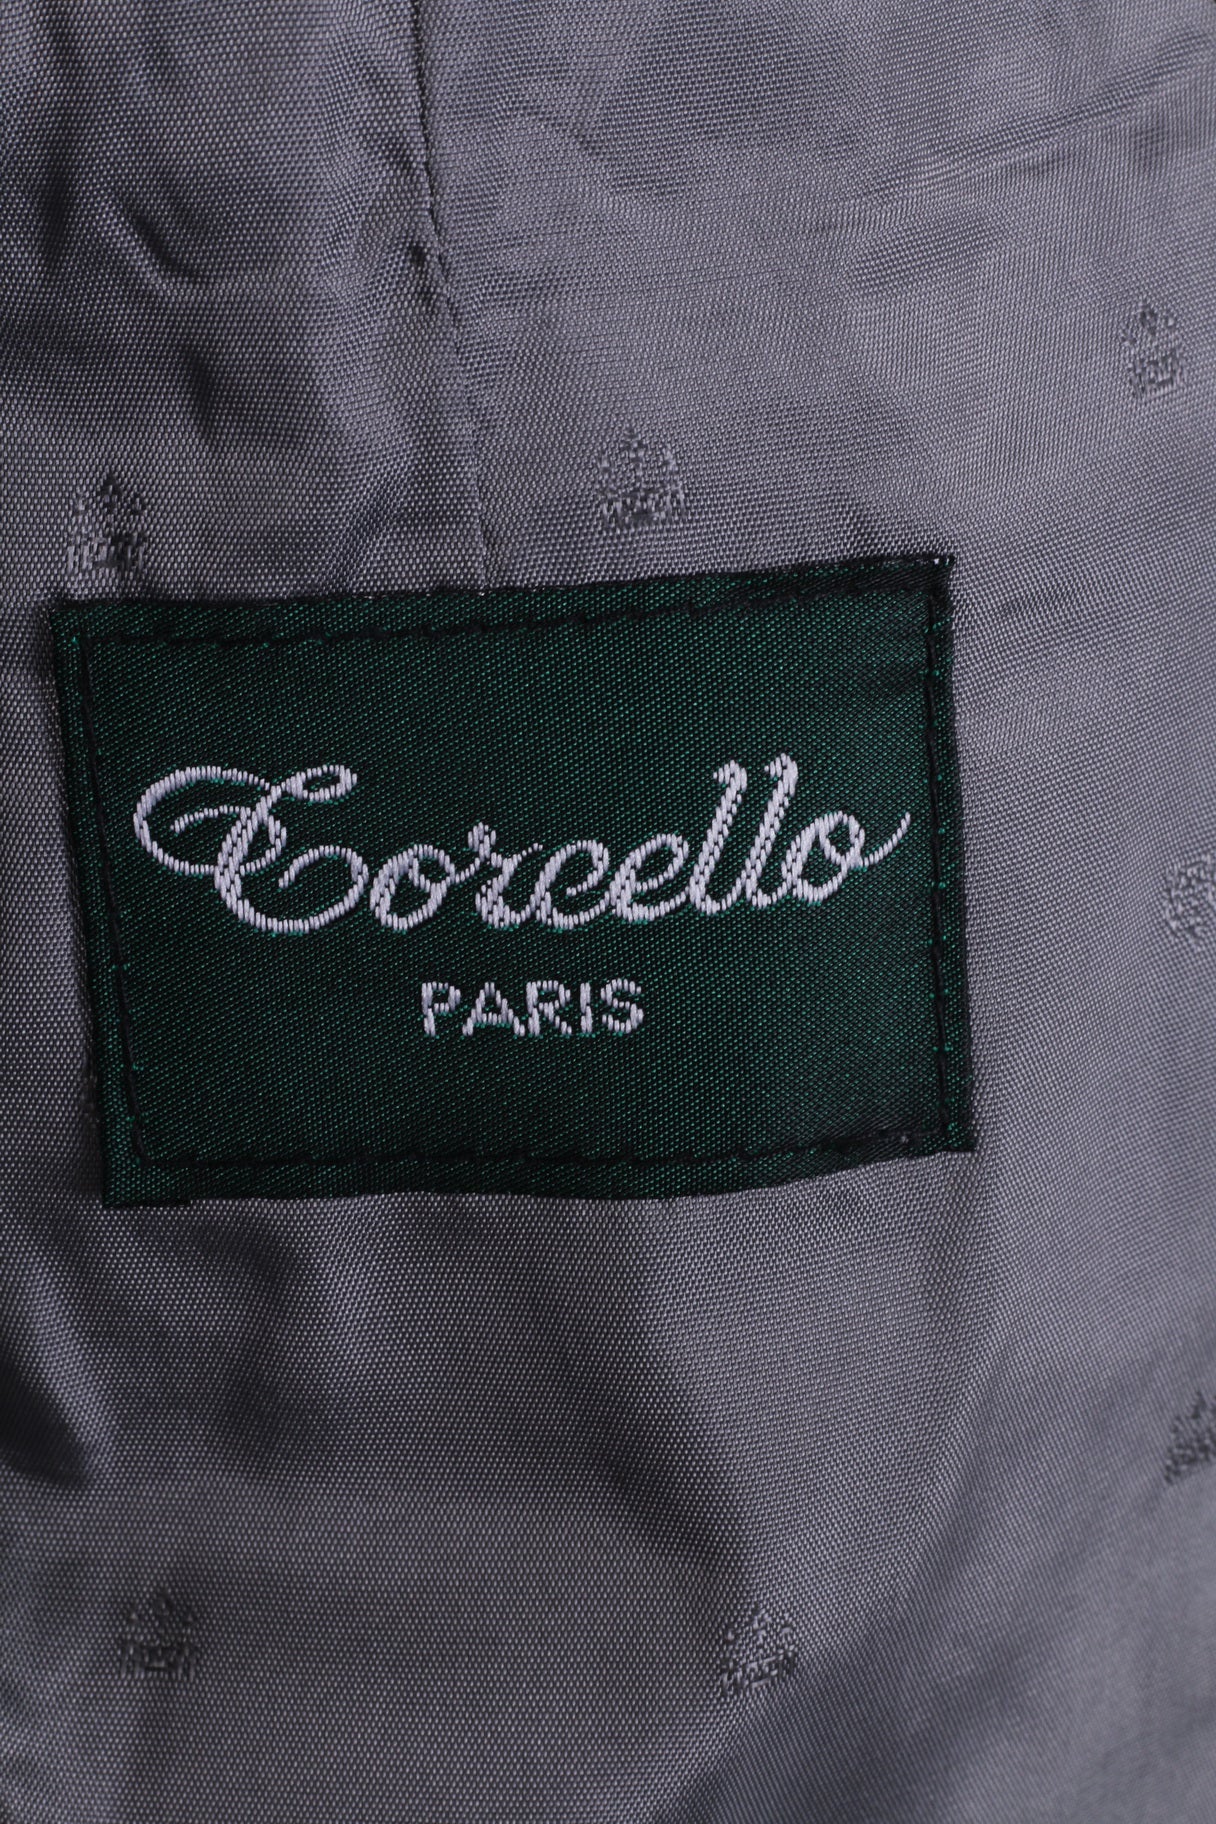 Coreello Paris Women S Blazer Gray Wool Vintage Moorside Worsteds Wool Jacket